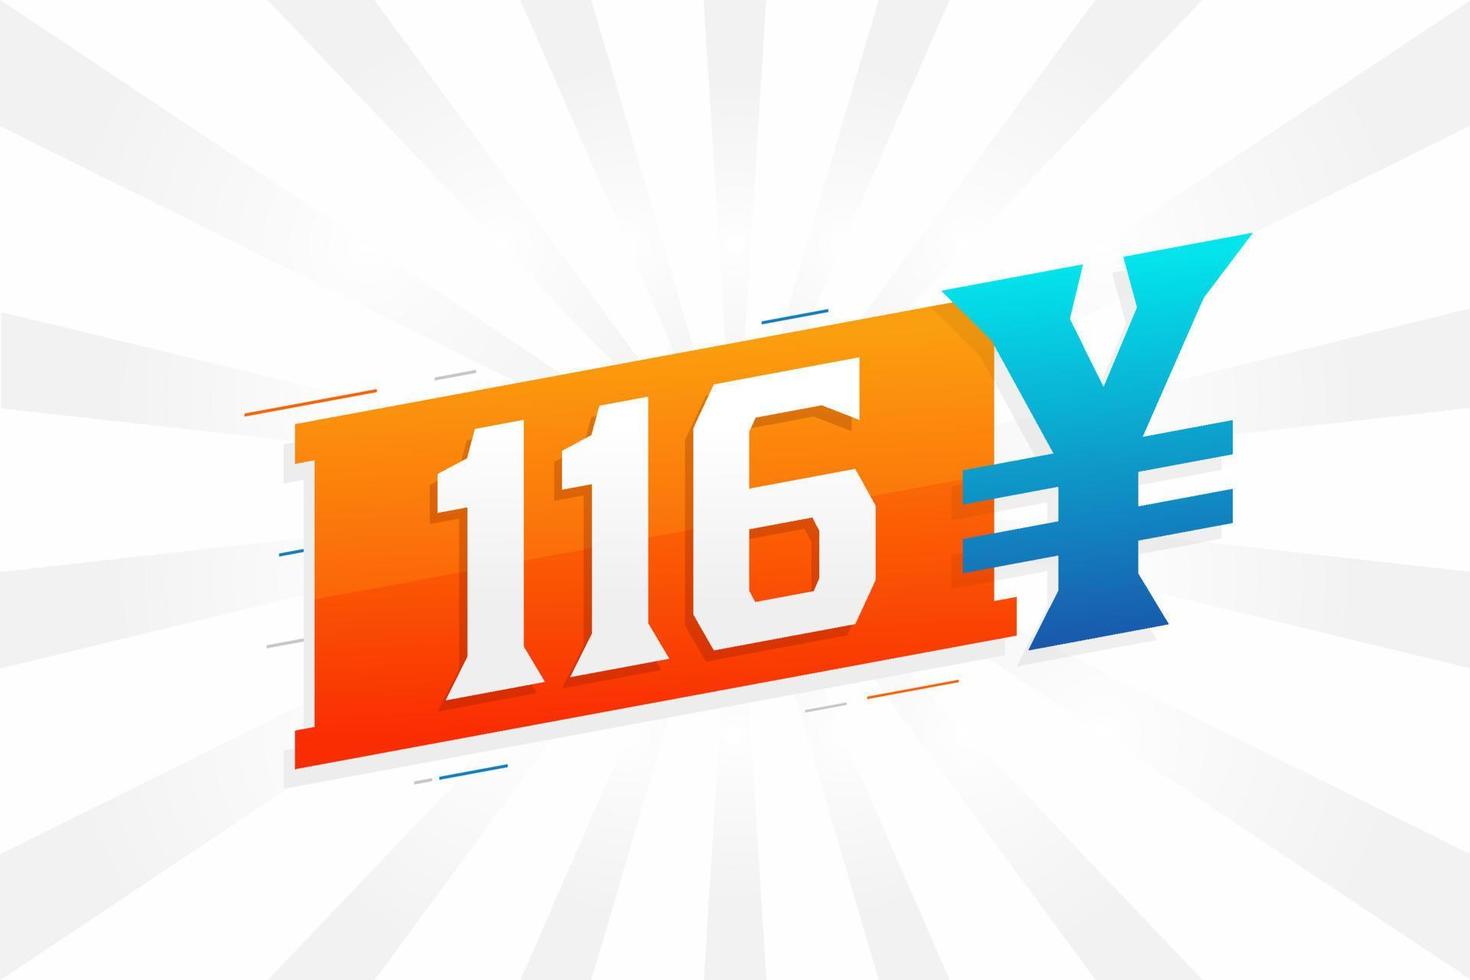 116 yuan Cinese moneta vettore testo simbolo. 116 yen giapponese moneta i soldi azione vettore